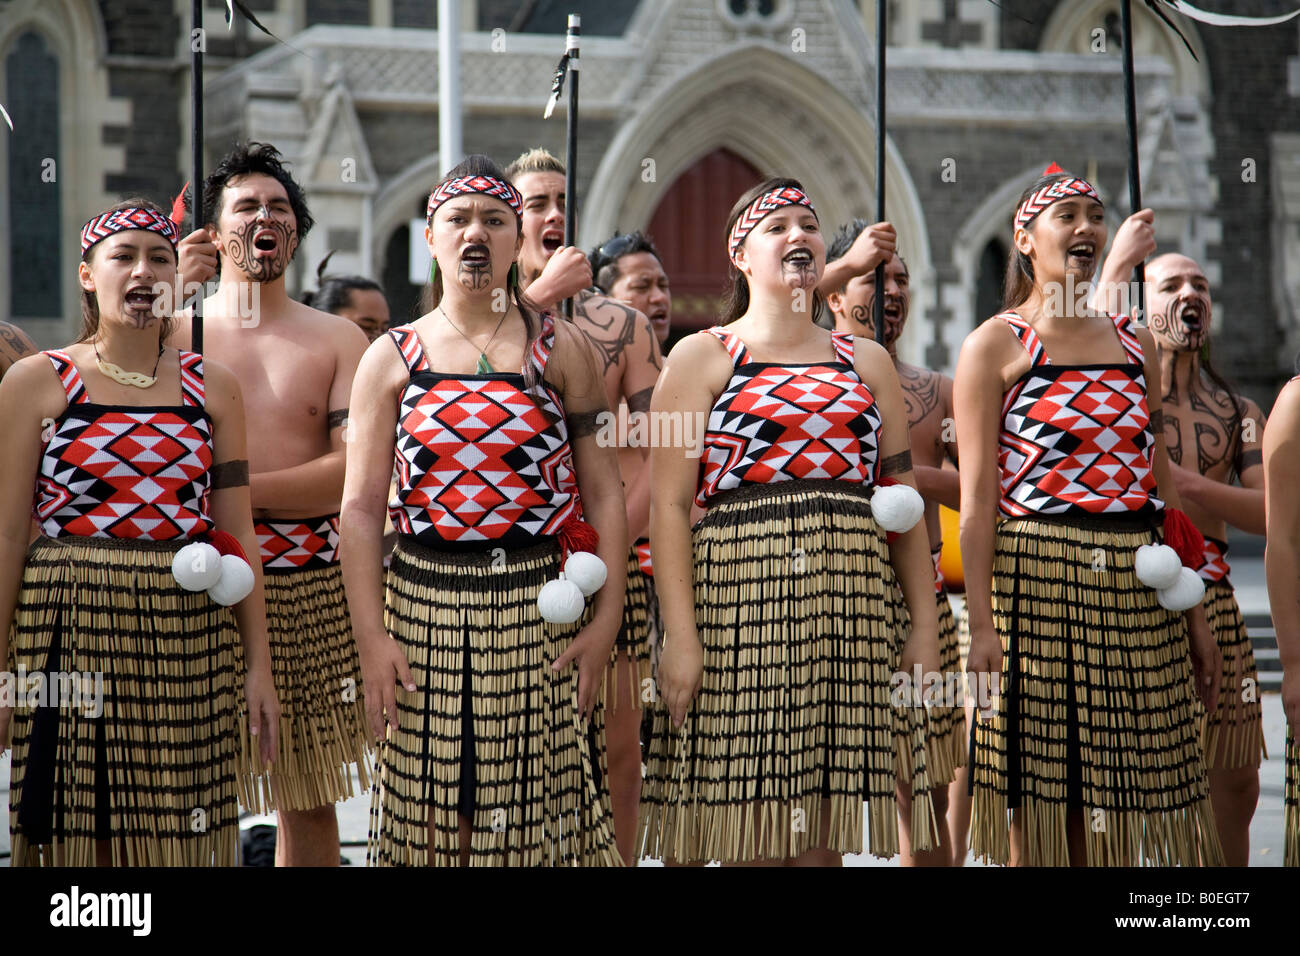 new zealand maori people in christchurch Stock Photo - Alamy